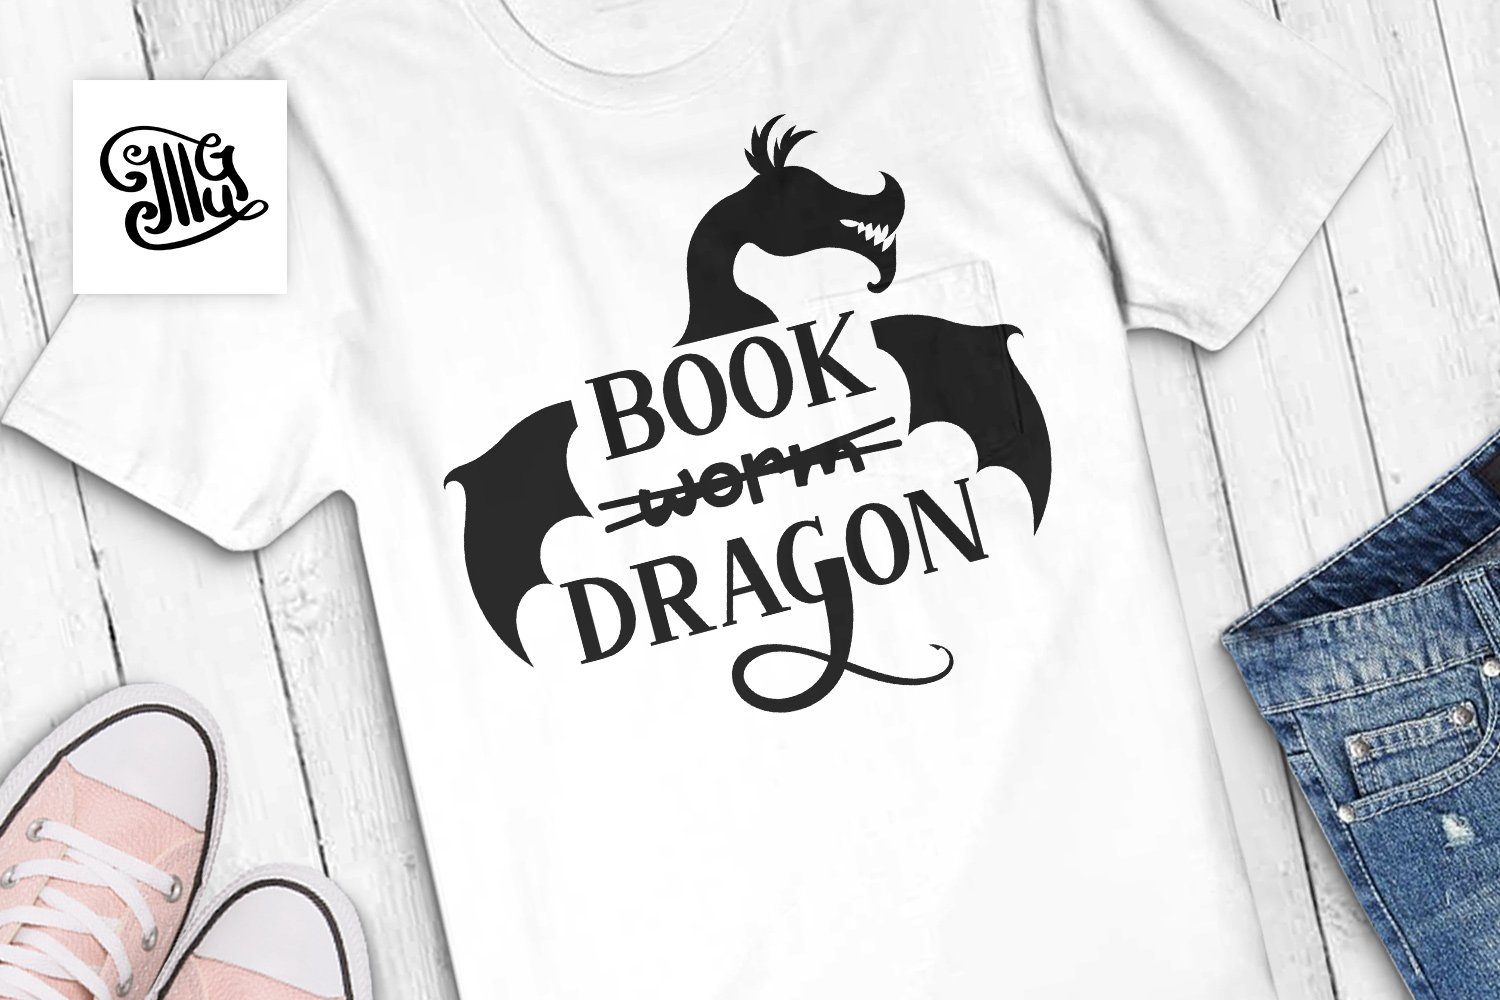 Download Book Worm Dragon Svg Dragon Svg So Fontsy